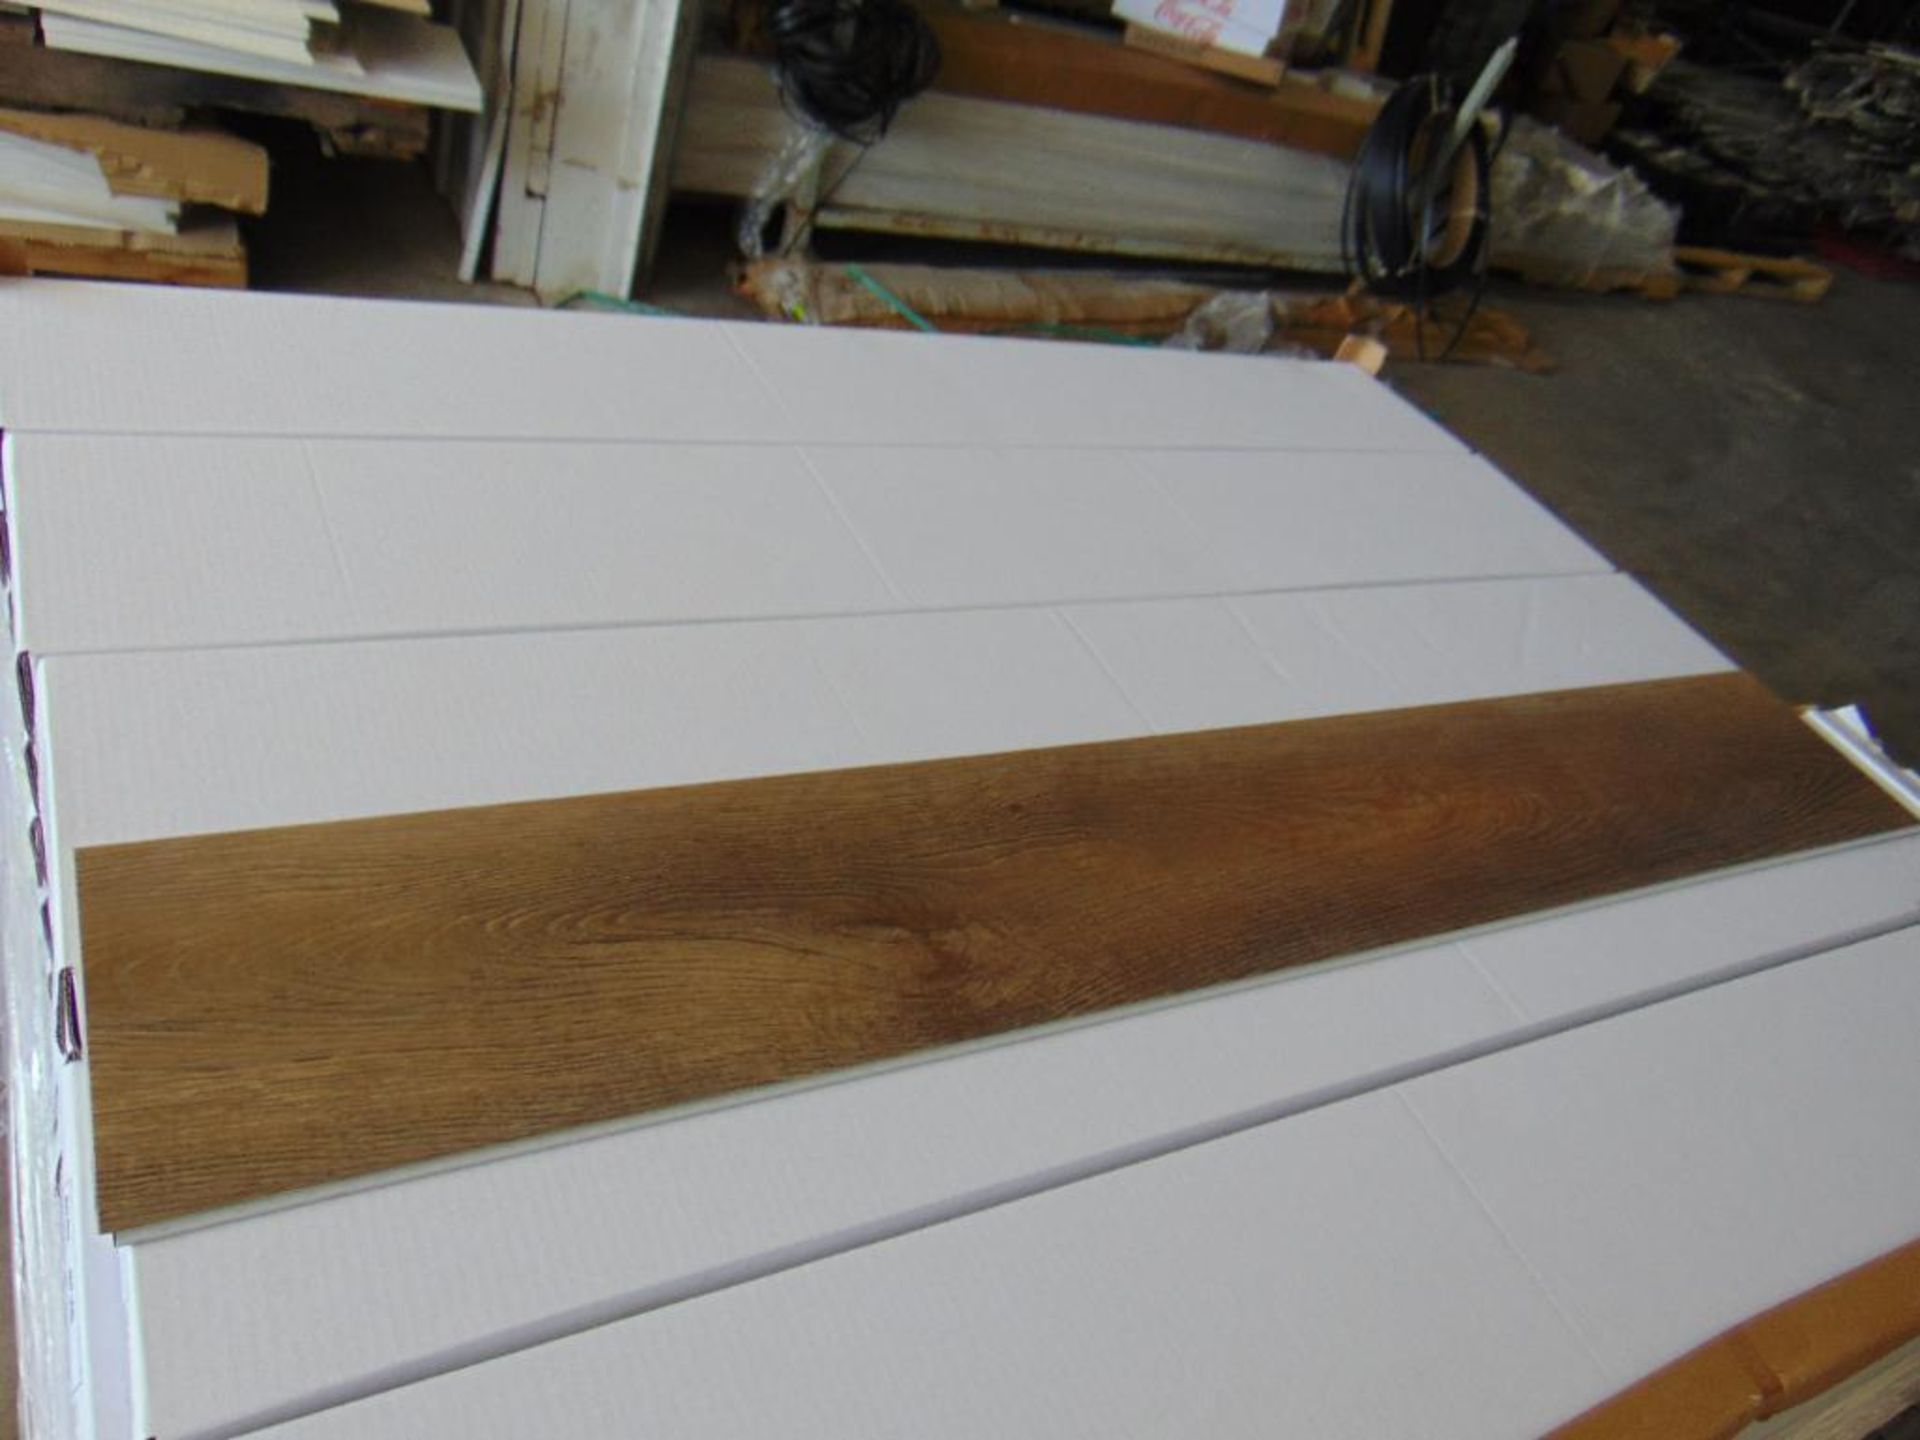 659.64 SF Waterproof Vinyl Plank - Next Level Toffee Snap Together Flooring - Image 2 of 6